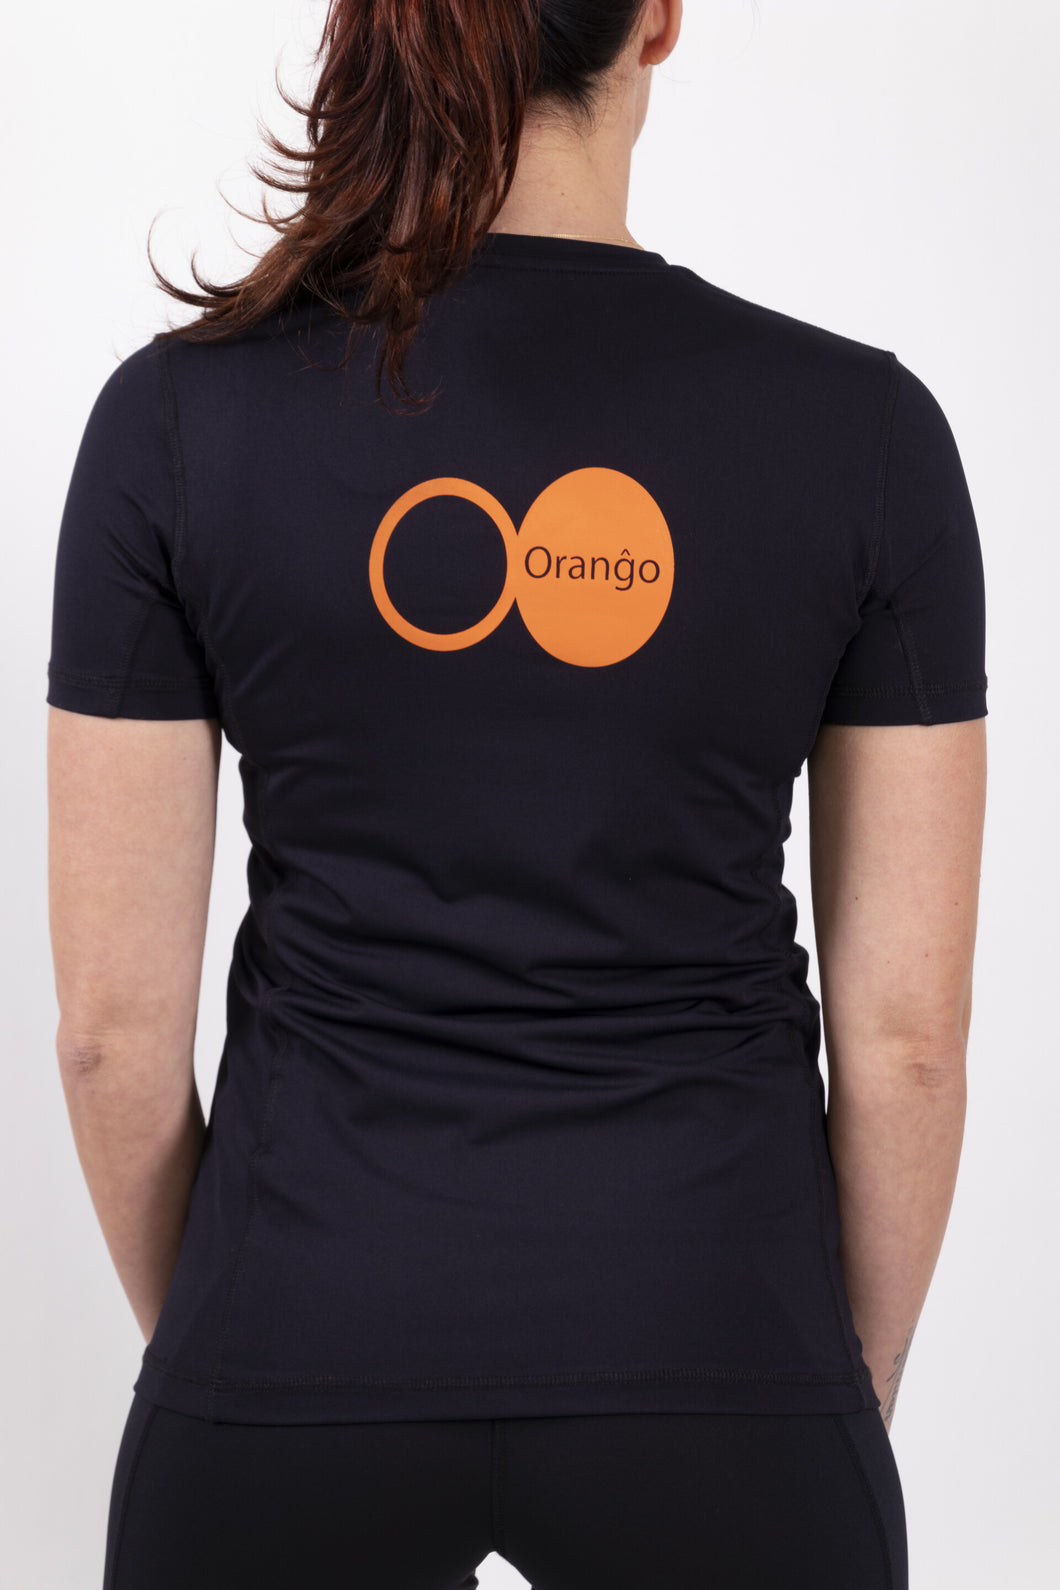 Orango Running - Womens T-shirt short sleeve V-neck - Regular Fit - Black - Print: Logo - P010201D